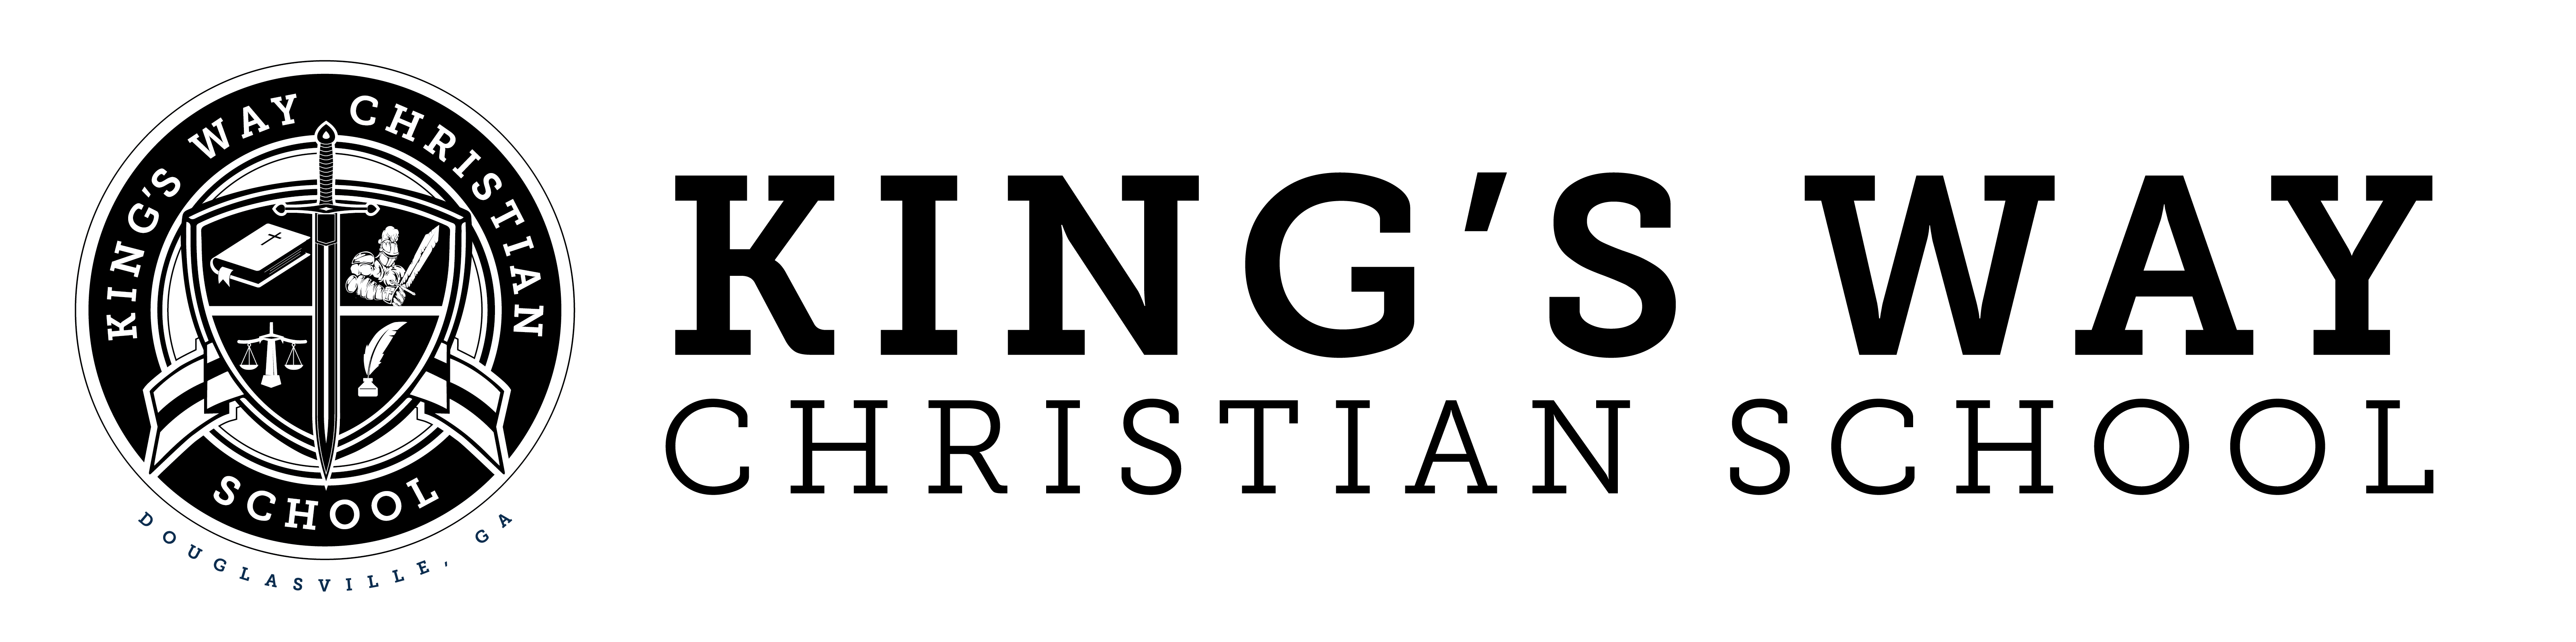 King's Way Christian School